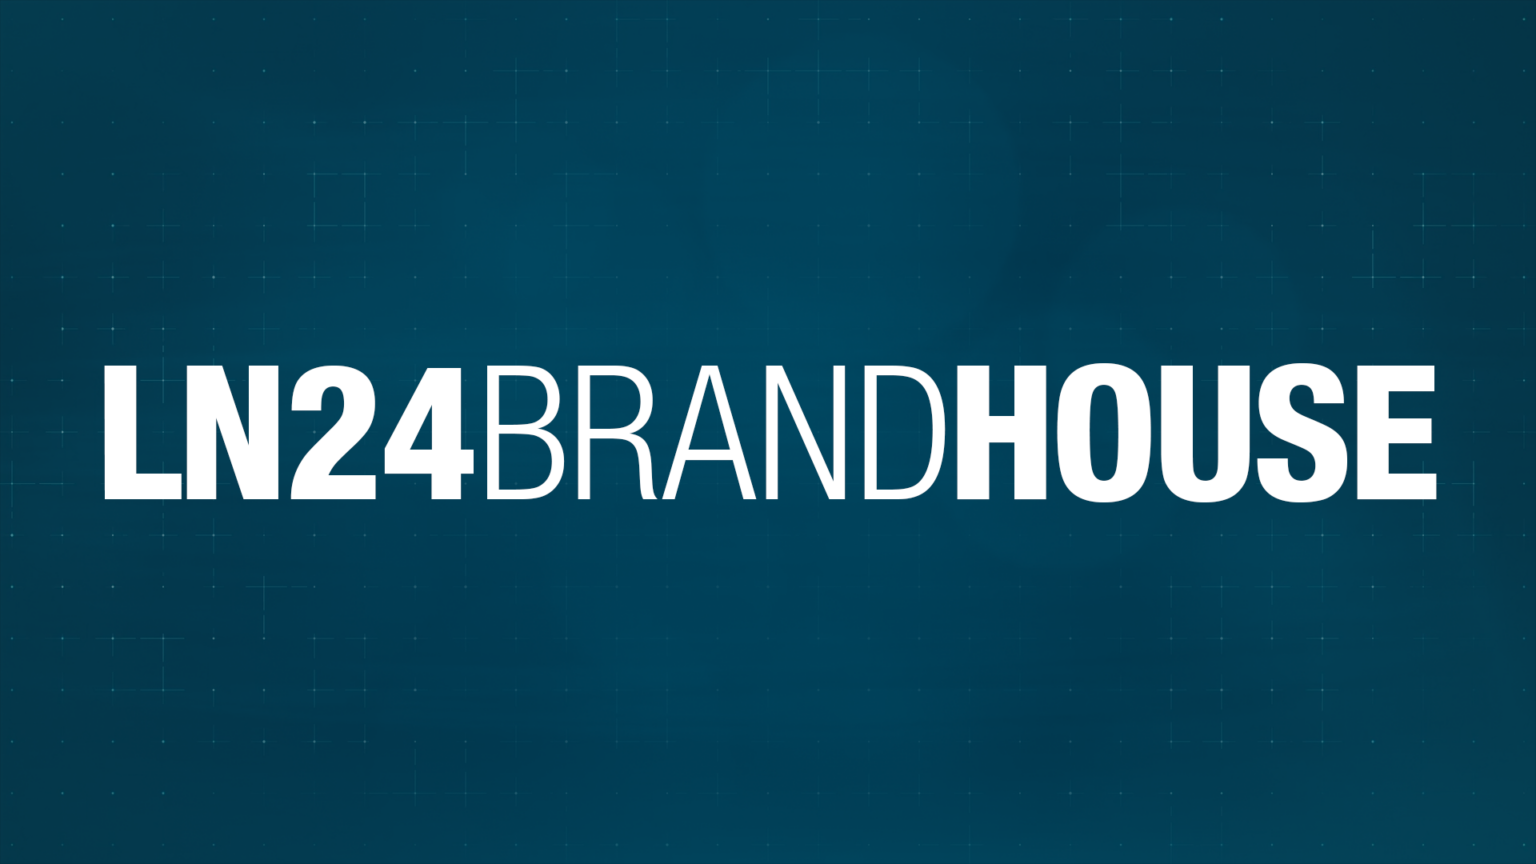 LN24 BrandHouse Studio